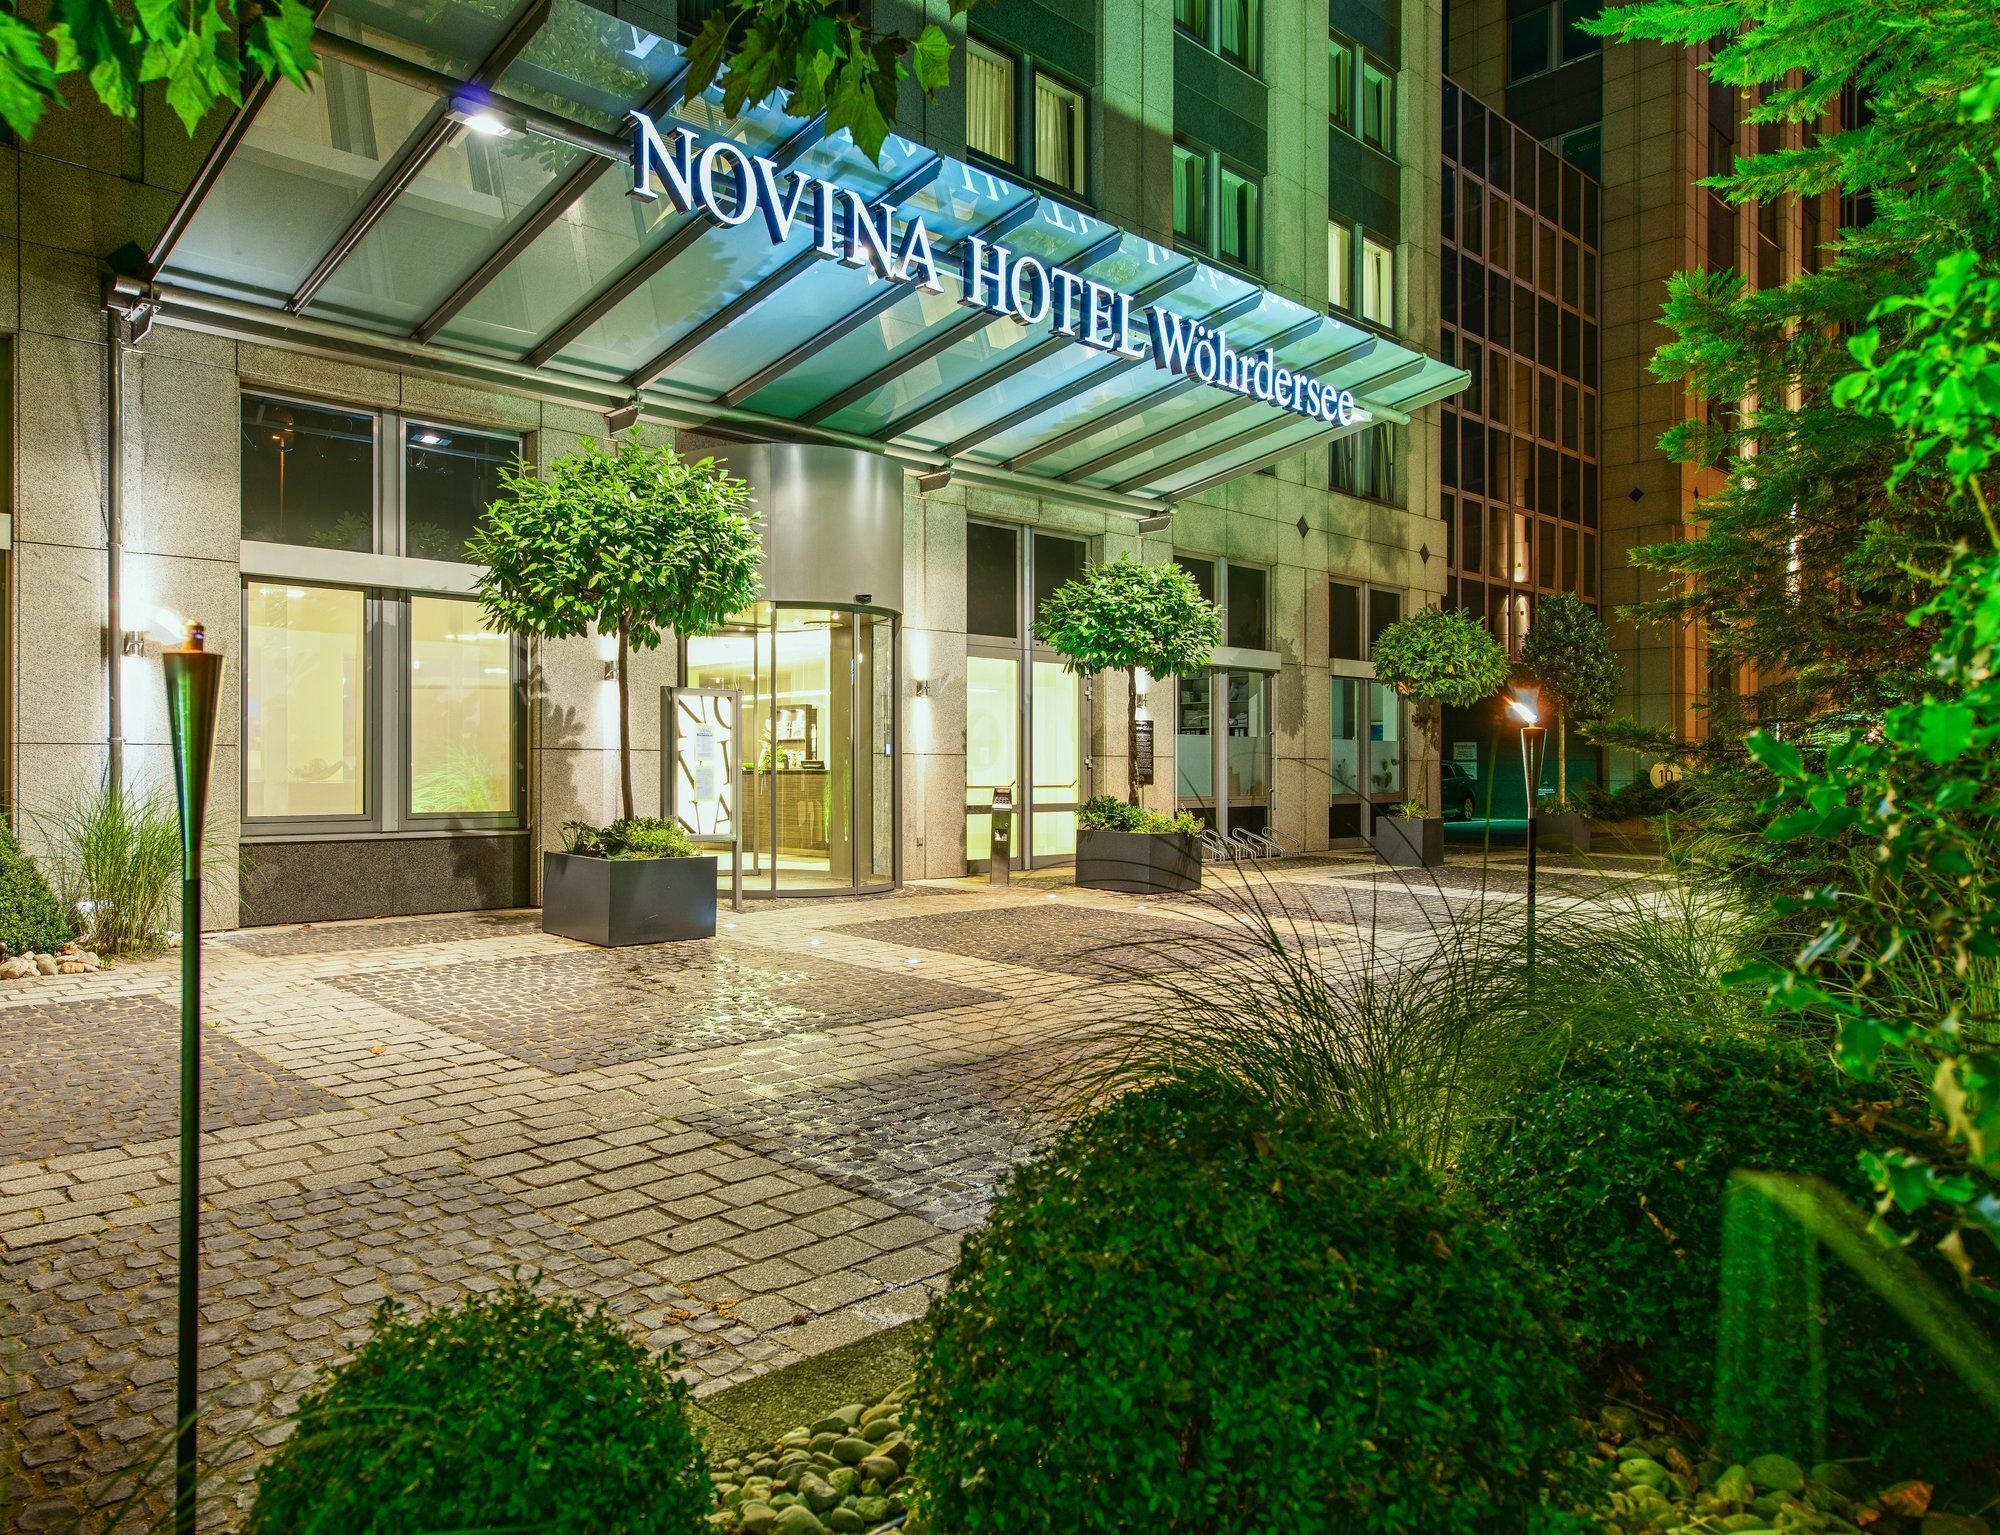 Novina Hotel Wohrdersee Nurnberg City Екстериор снимка